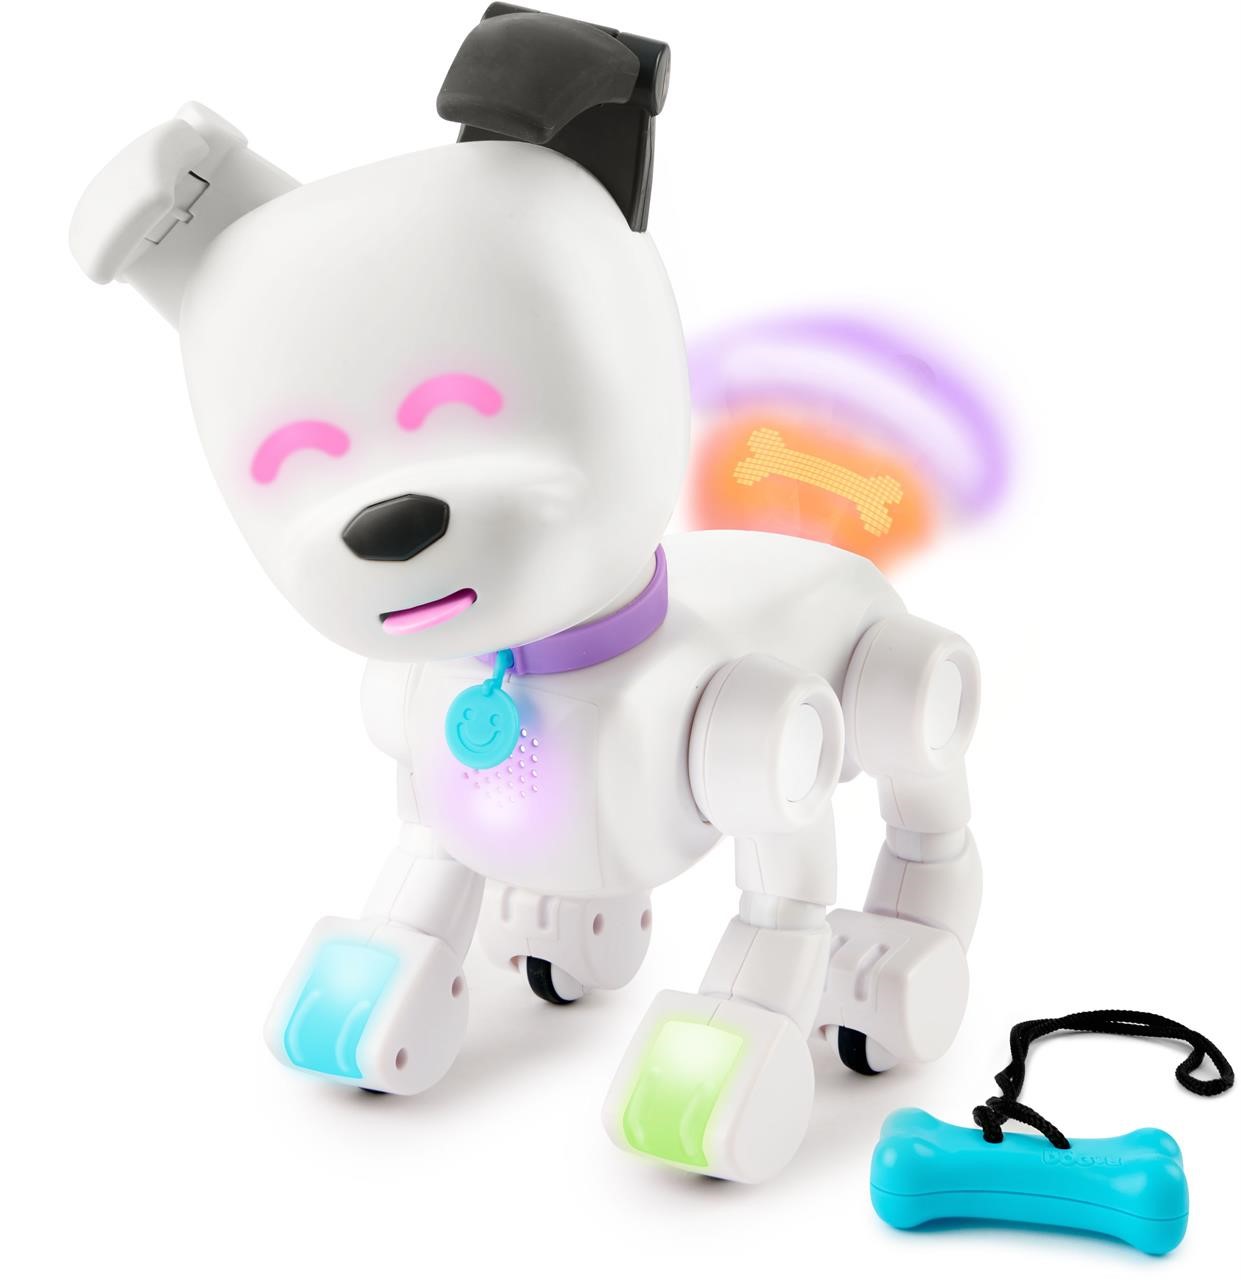 $80  Dog-E Robot Dog with LED Lights  App Connect